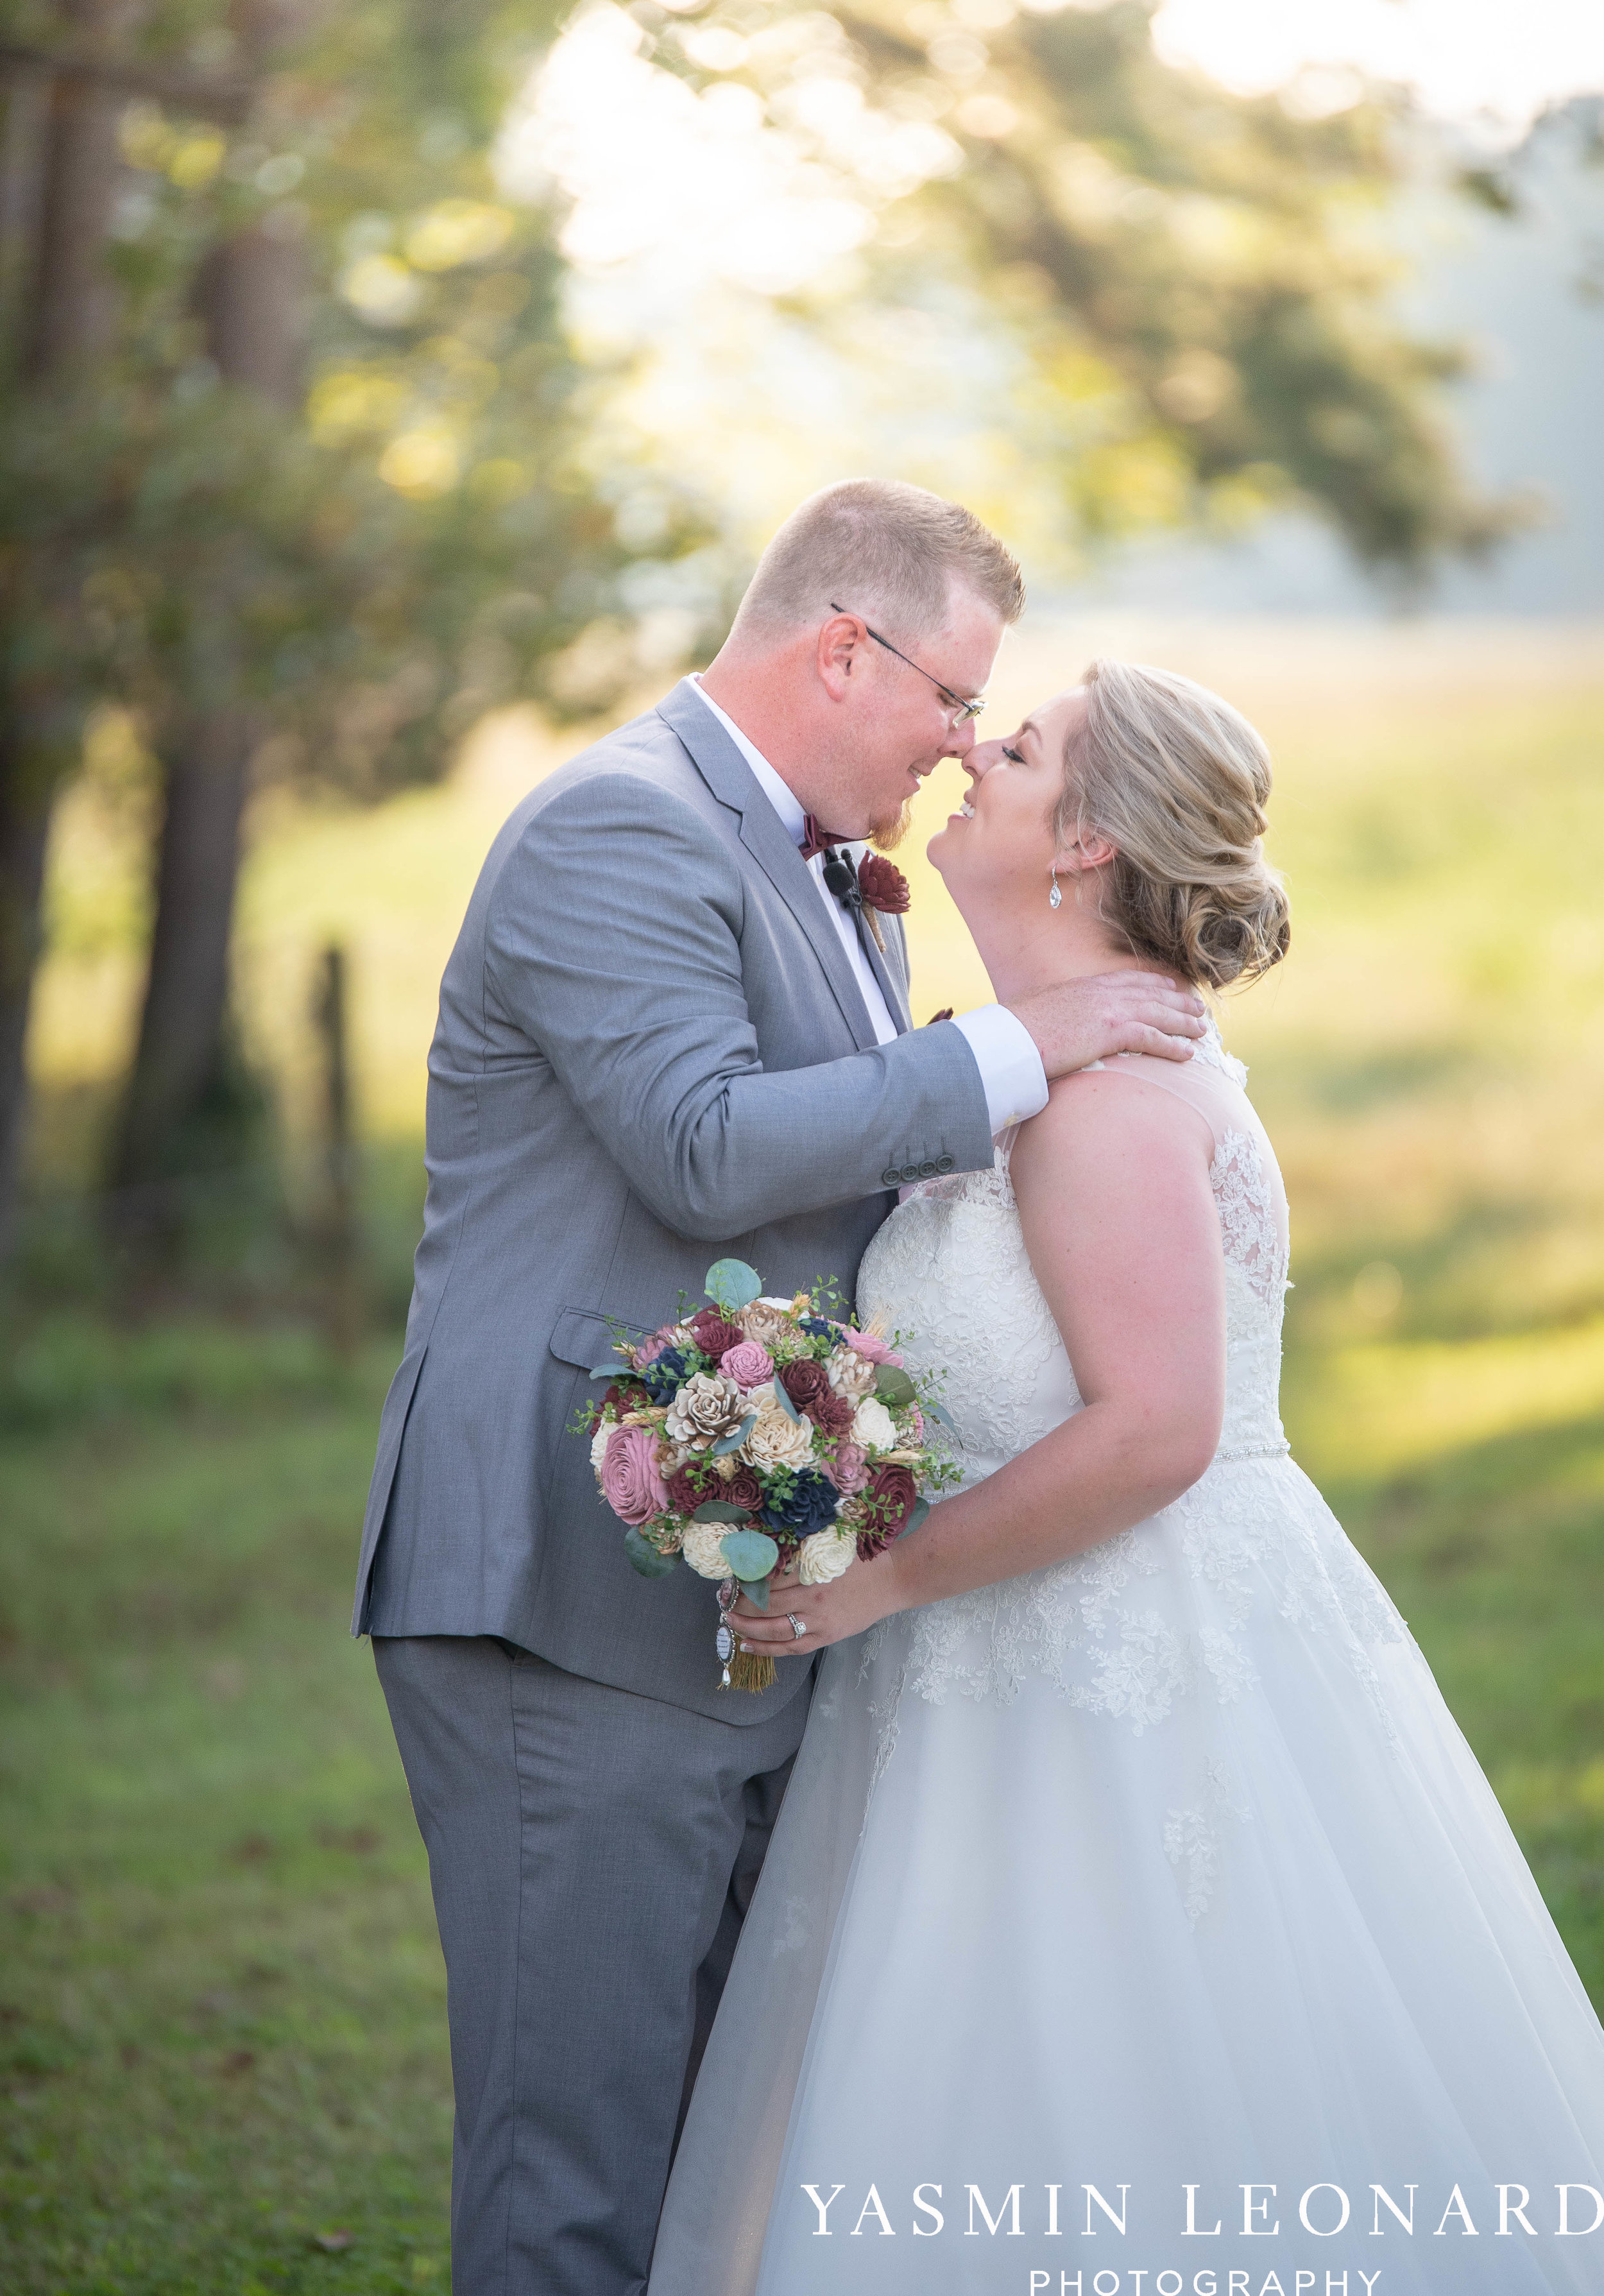 Danner Farms - NC Wedding Venues - NC Barns - Statesville NC - NC Wedding Photographer - High Point Wedding Photographer - Yasmin Leonard Photography-50.jpg